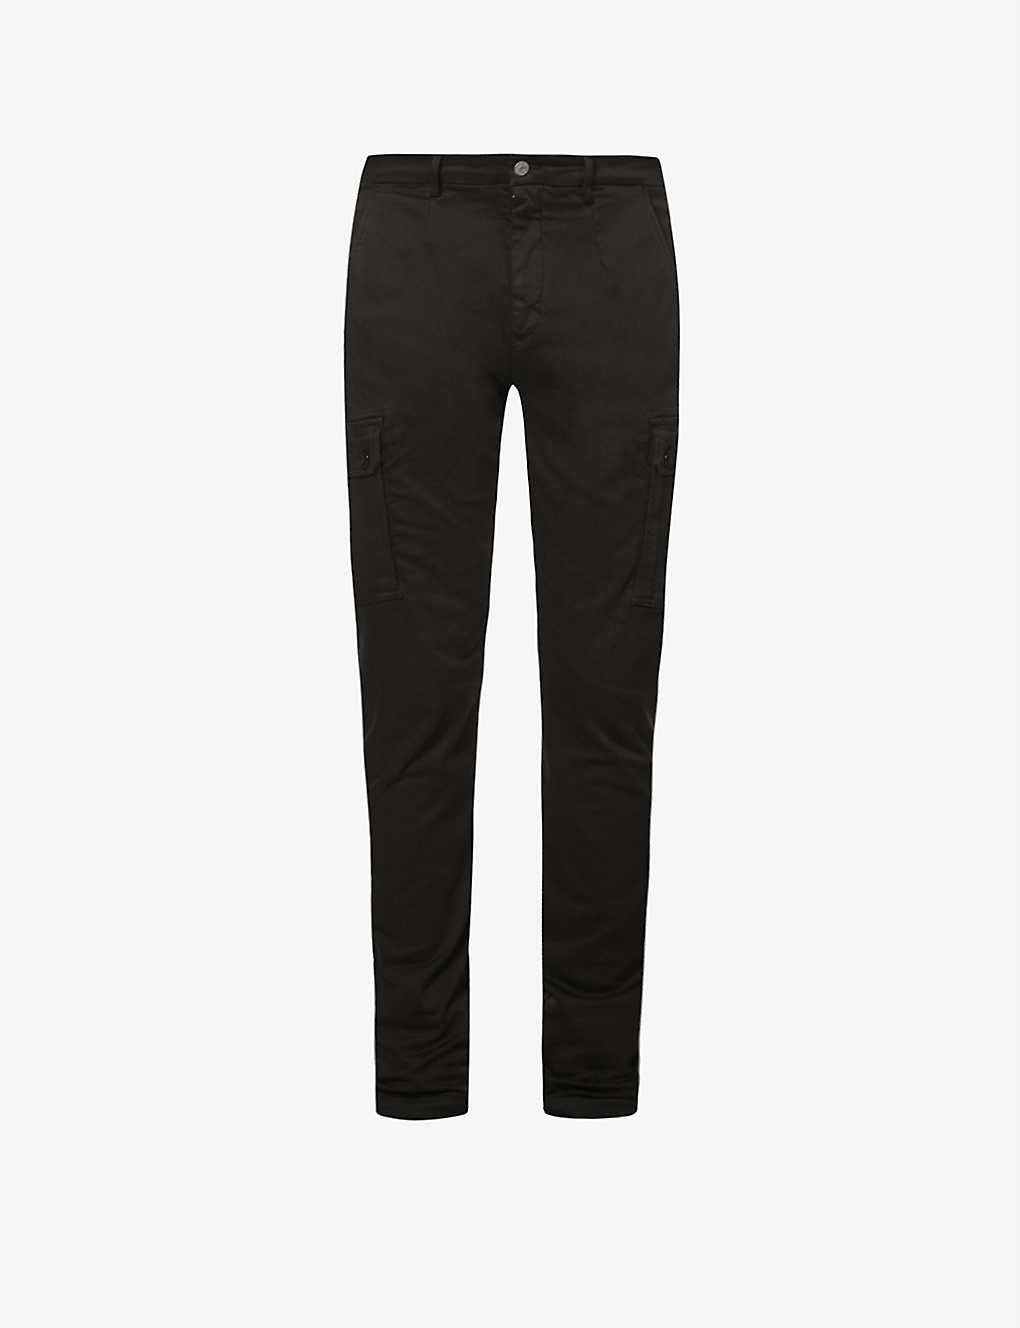 Replay Jaan Hyperflex Slim-fit Slim-leg Cotton-blend Cargo Trousers In Black